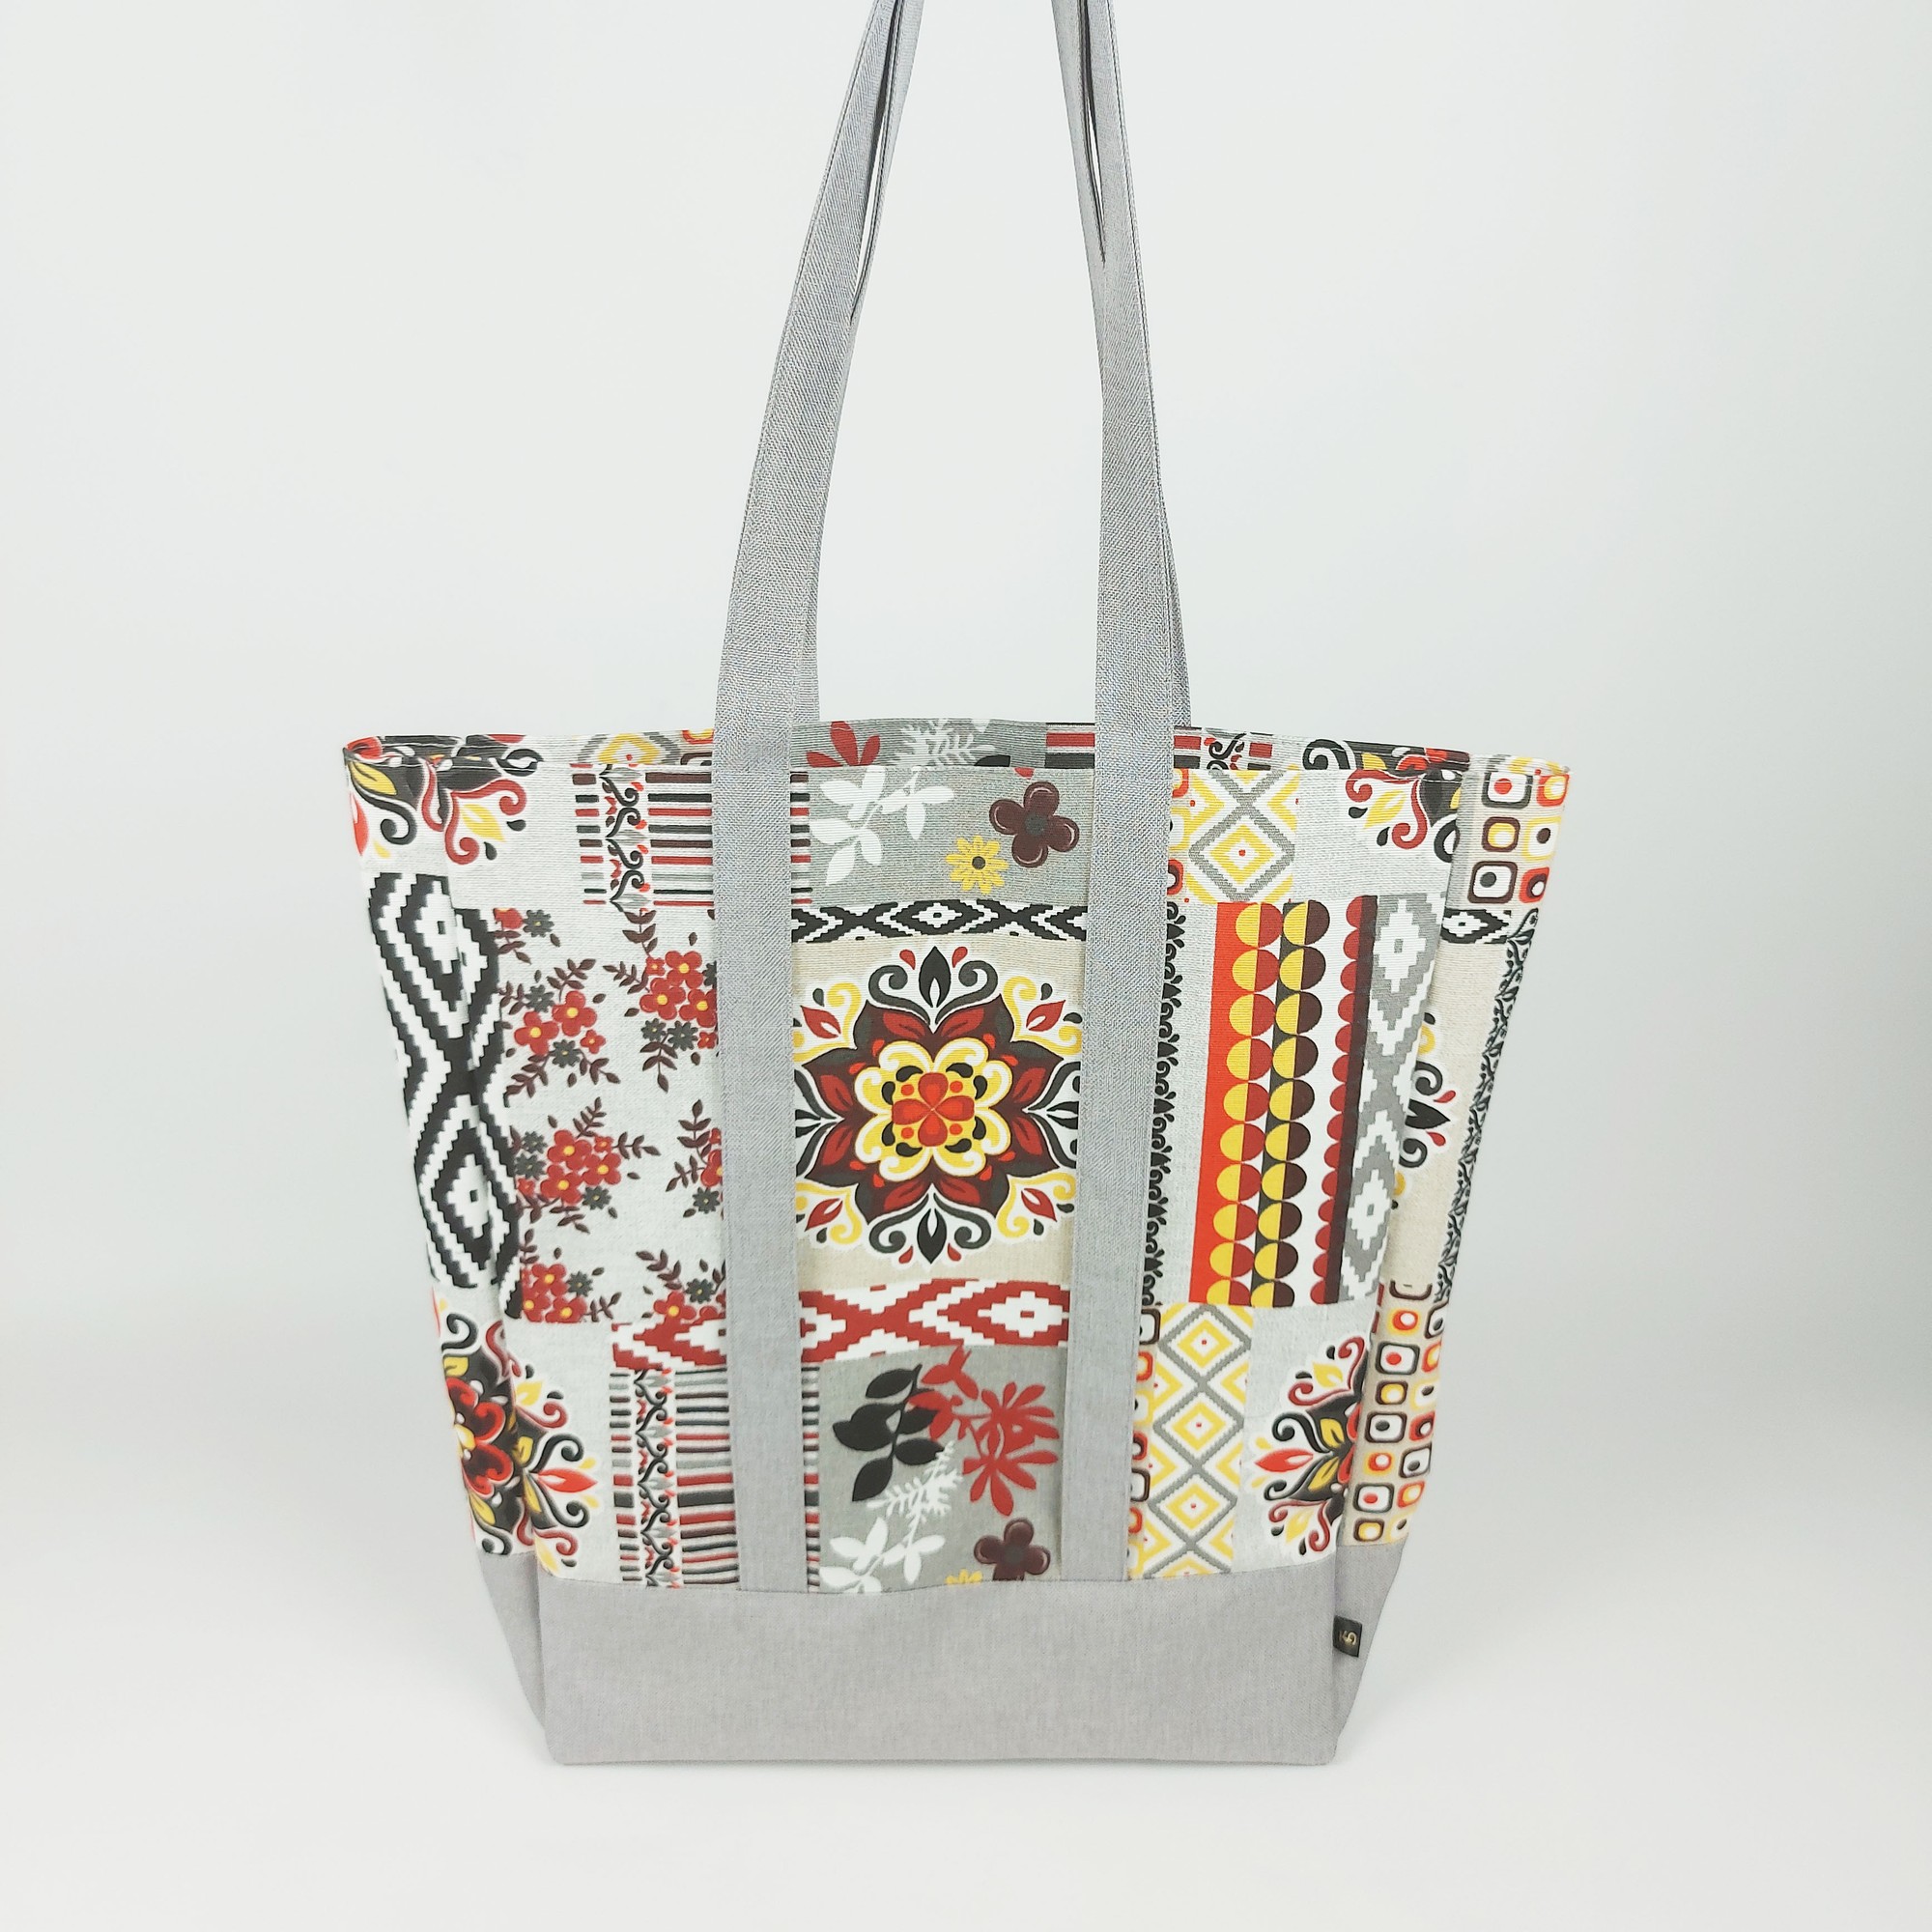 National-Motives handmade textile tote bag